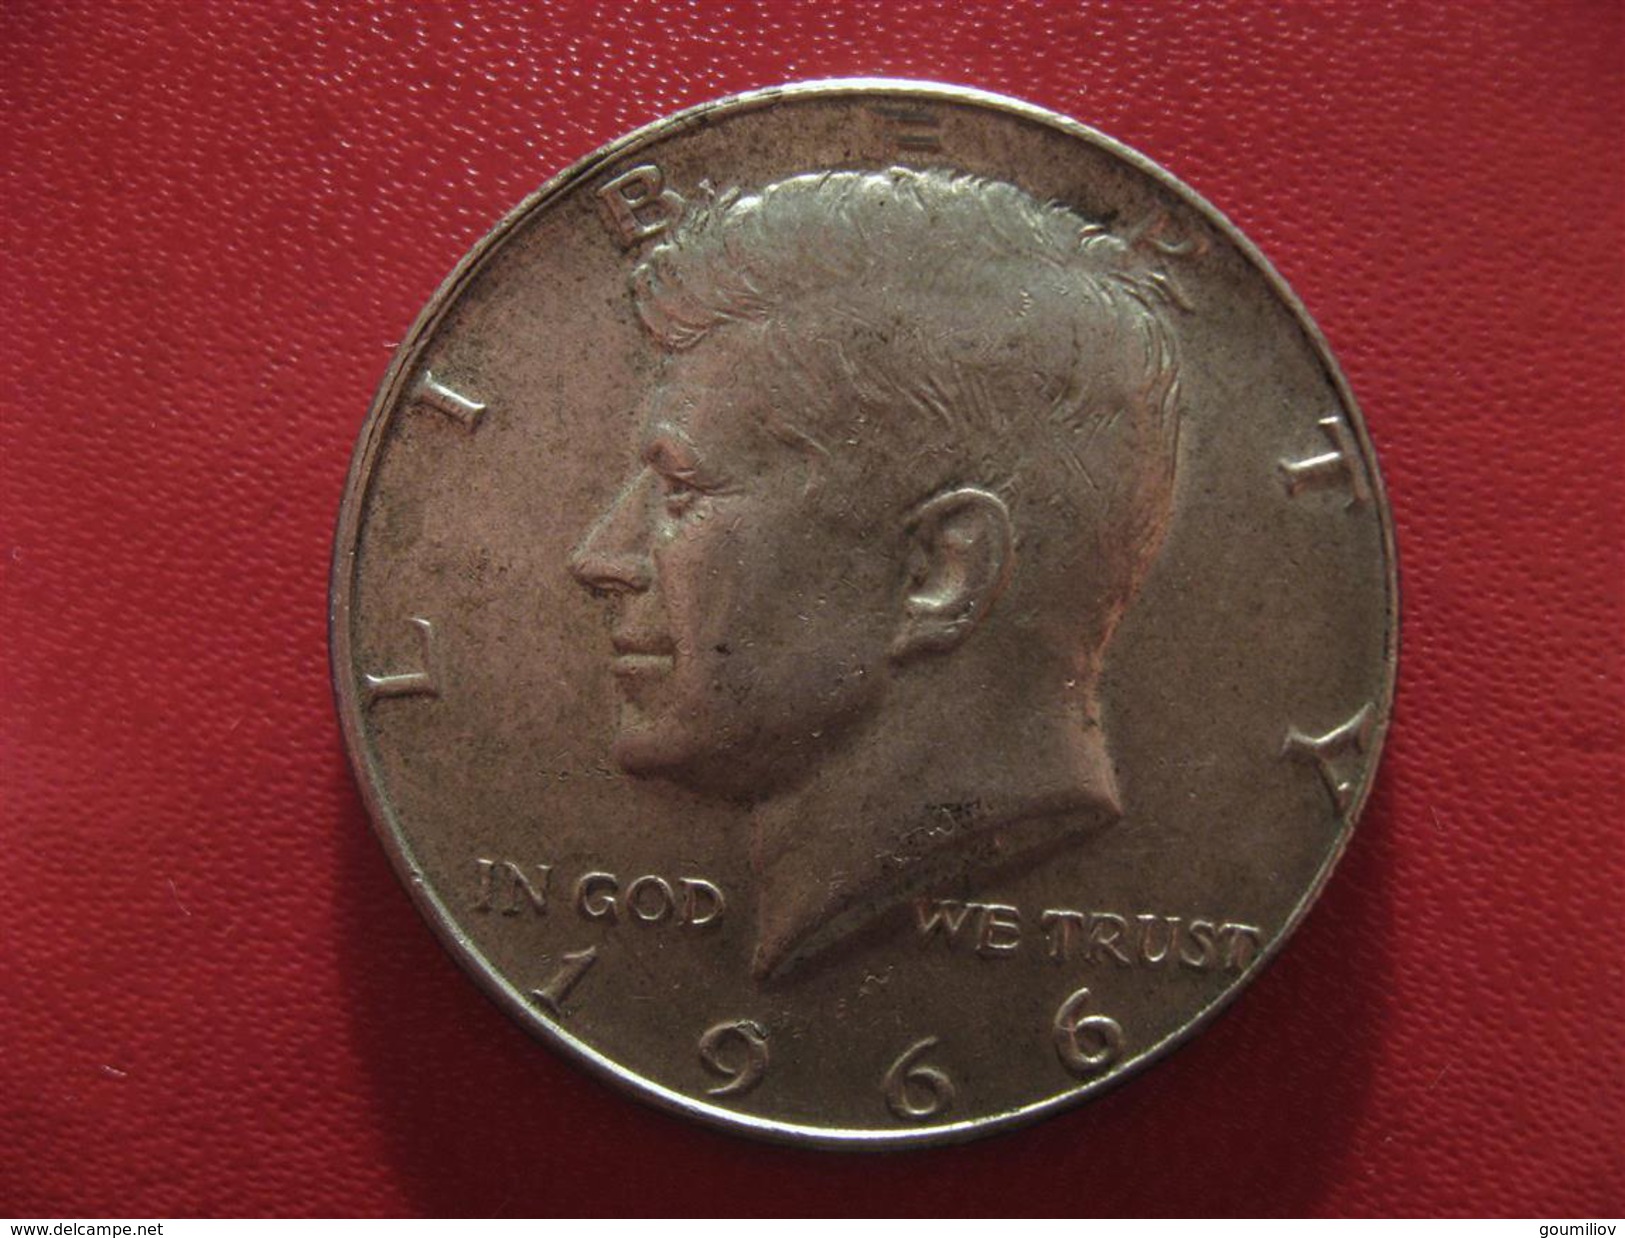 Etats-Unis - USA - Half Dollar 1966 1682 - 1964-…: Kennedy